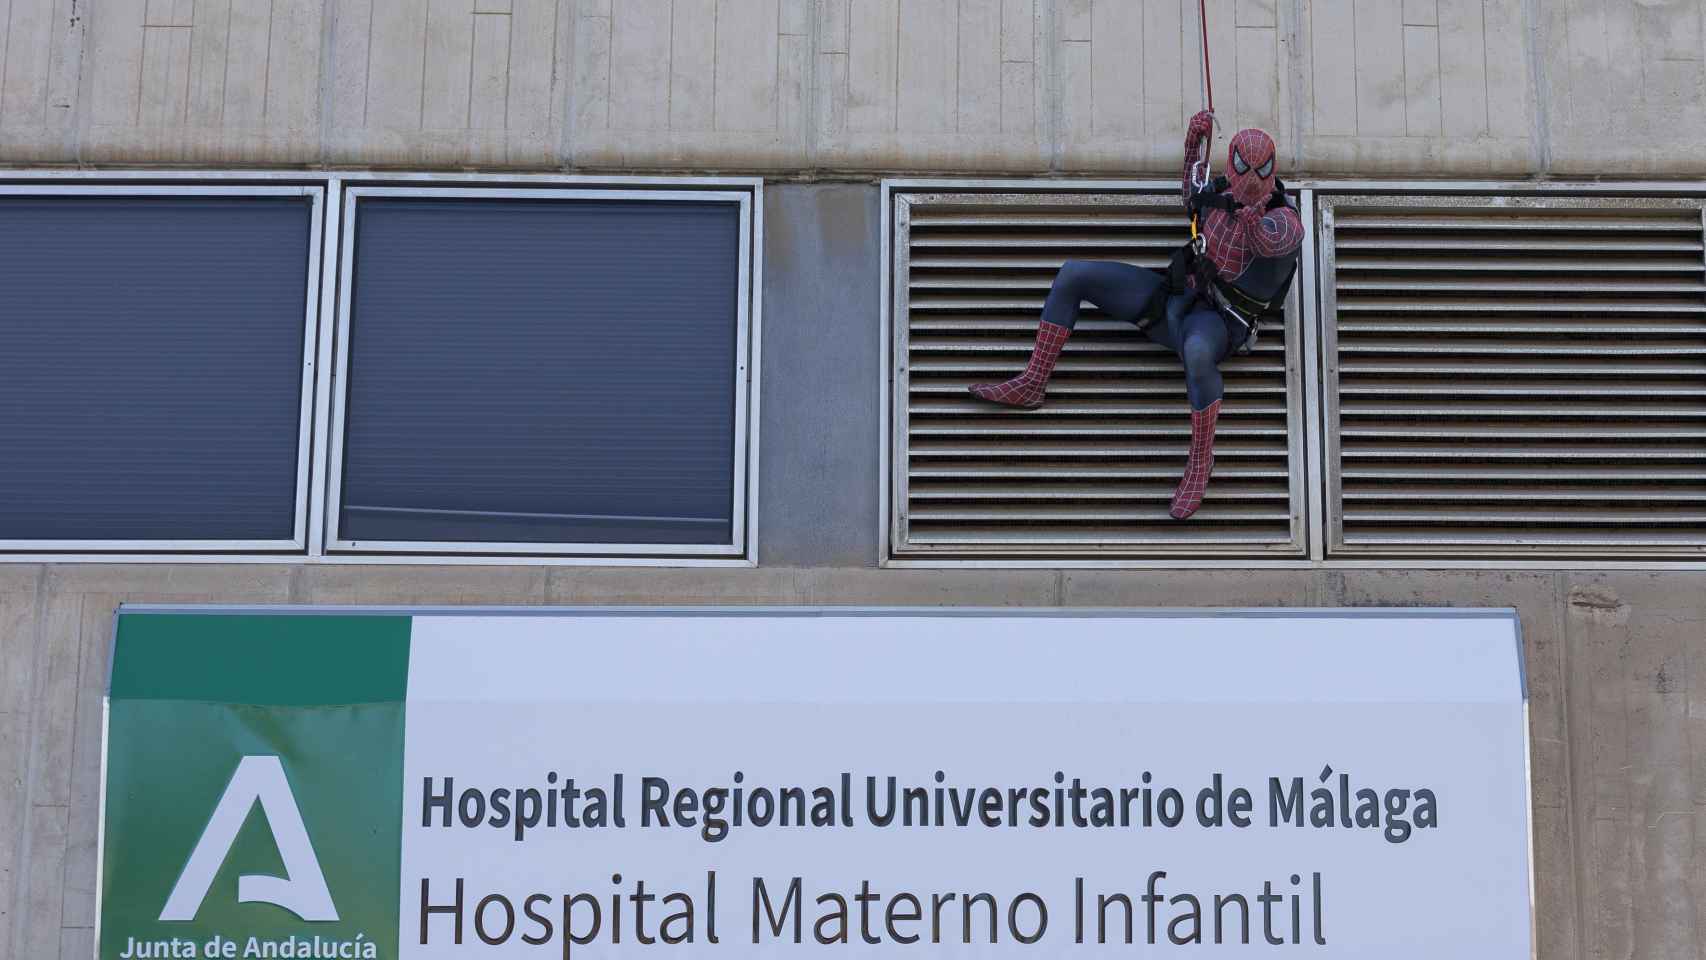 Edu Balboa posa como Spiderman desde la fachada del hospital.